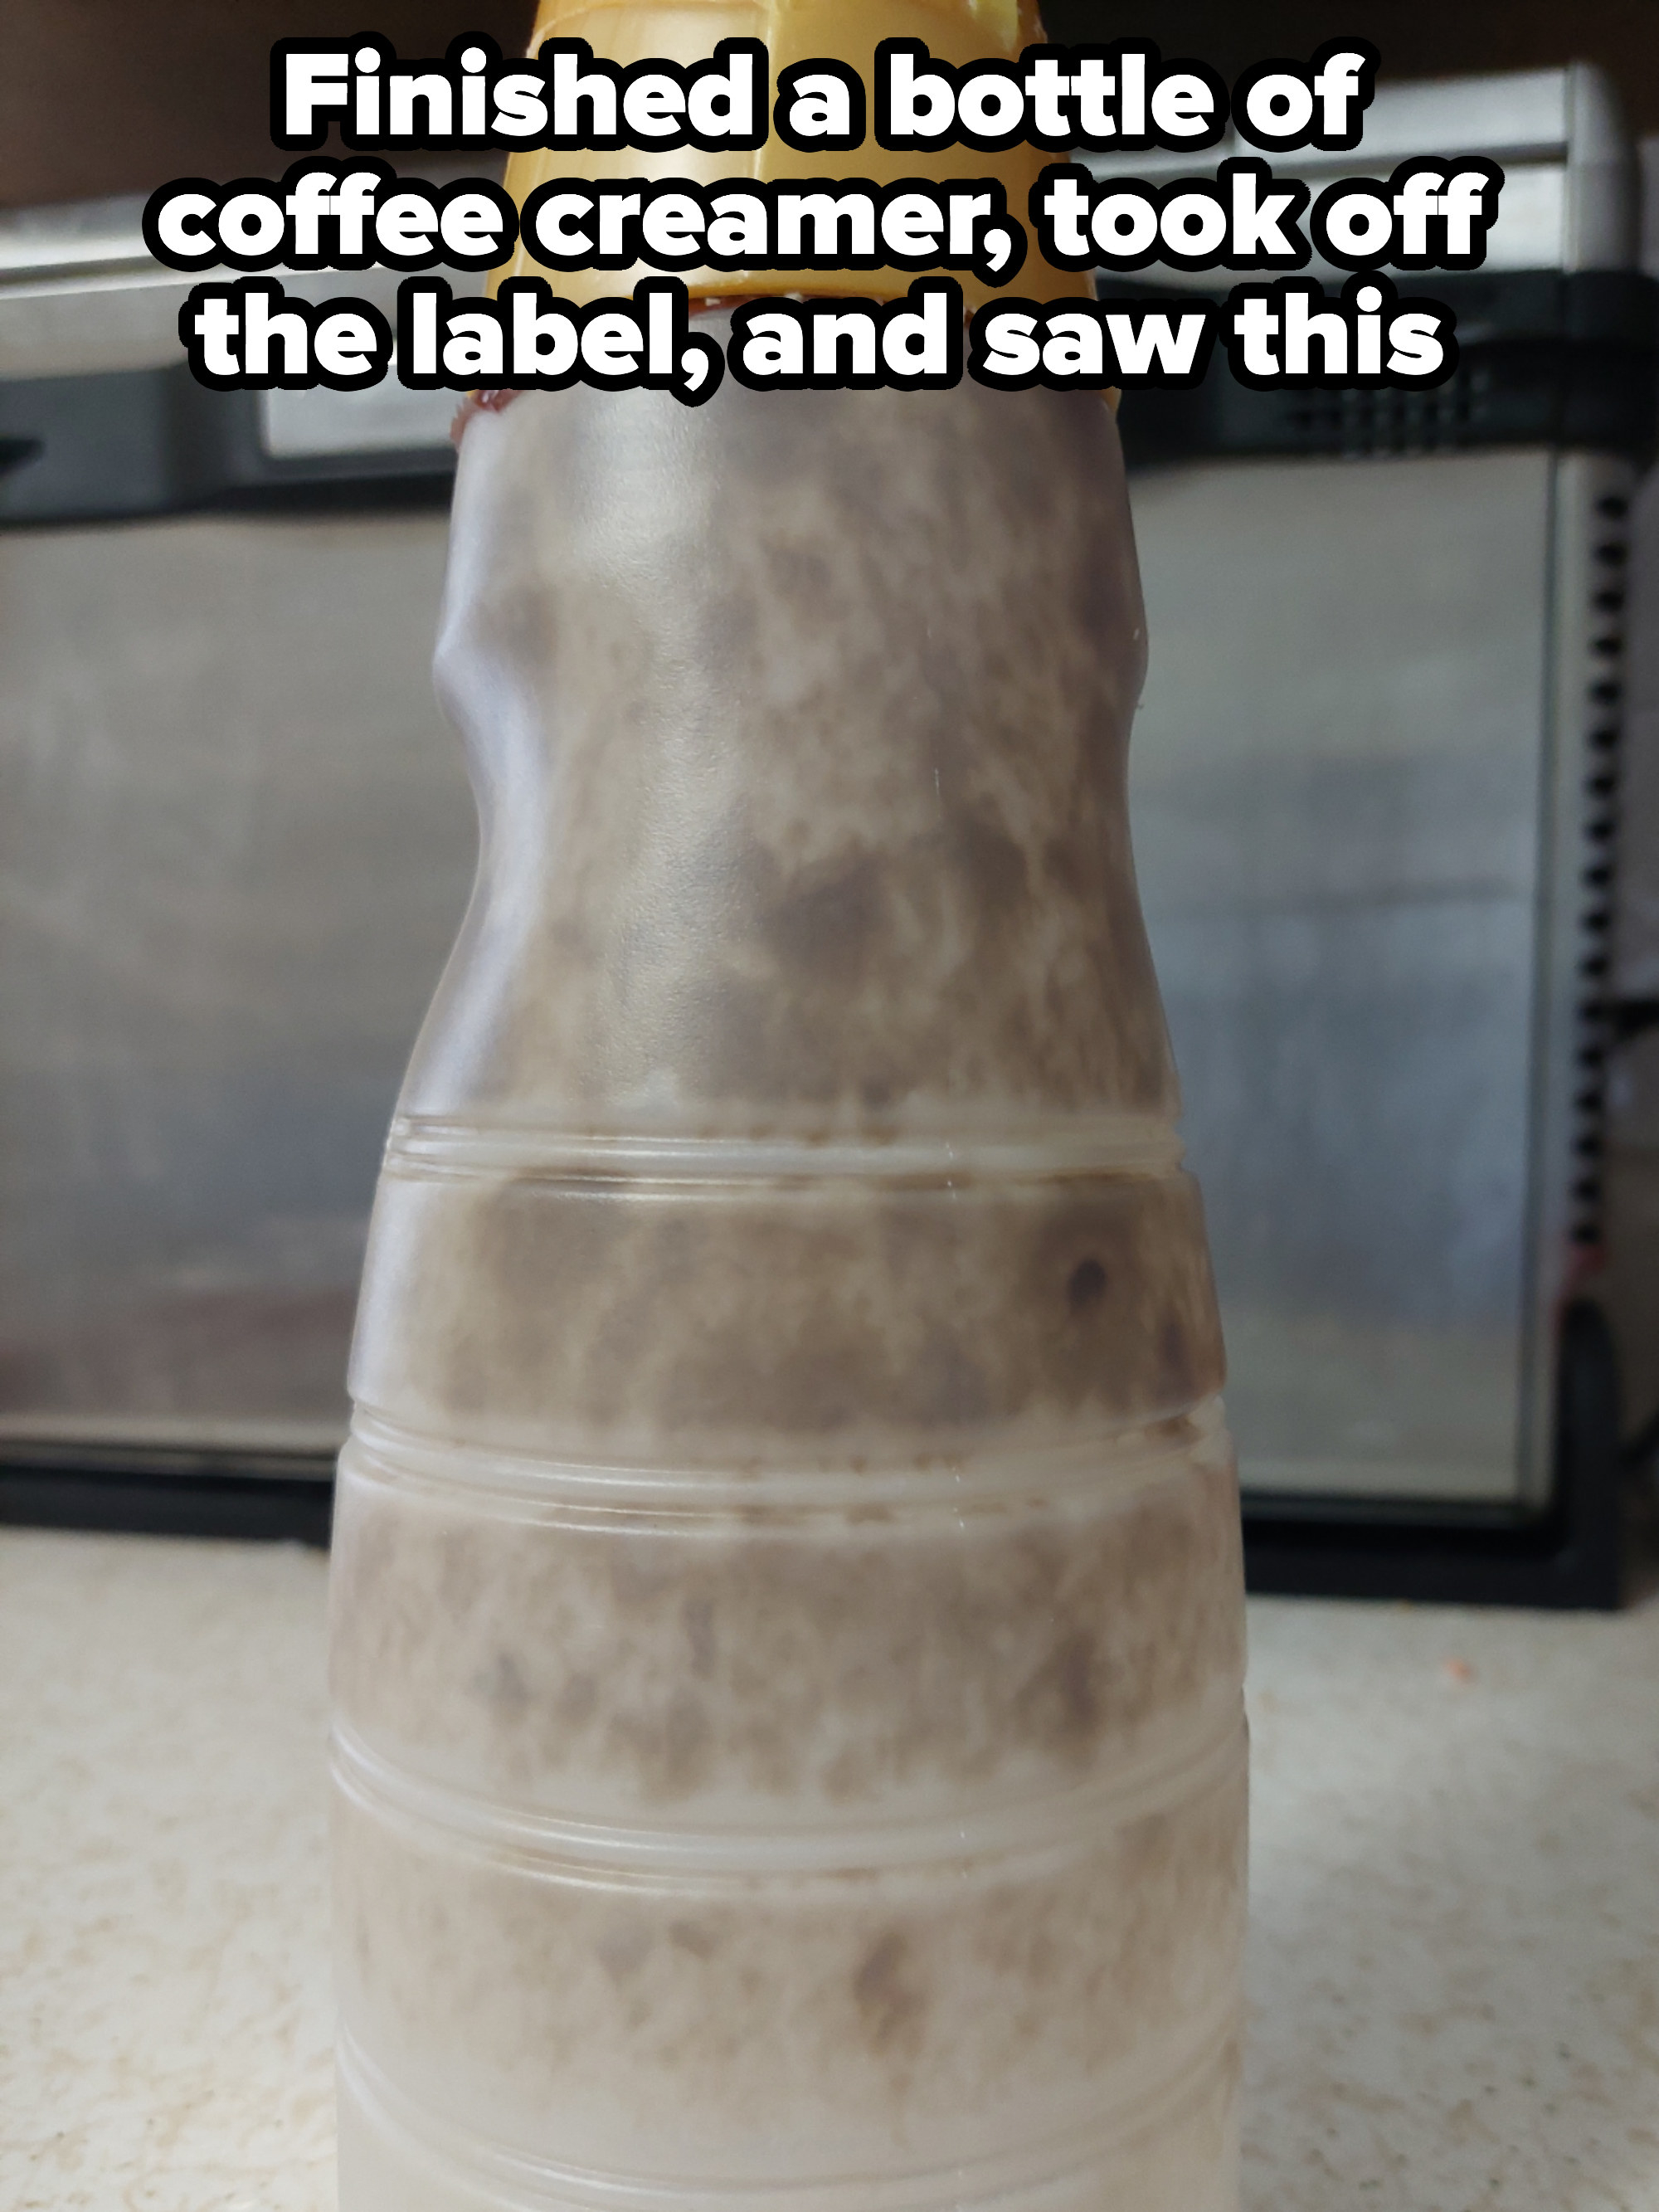 A moldy bottle of coffee creamer